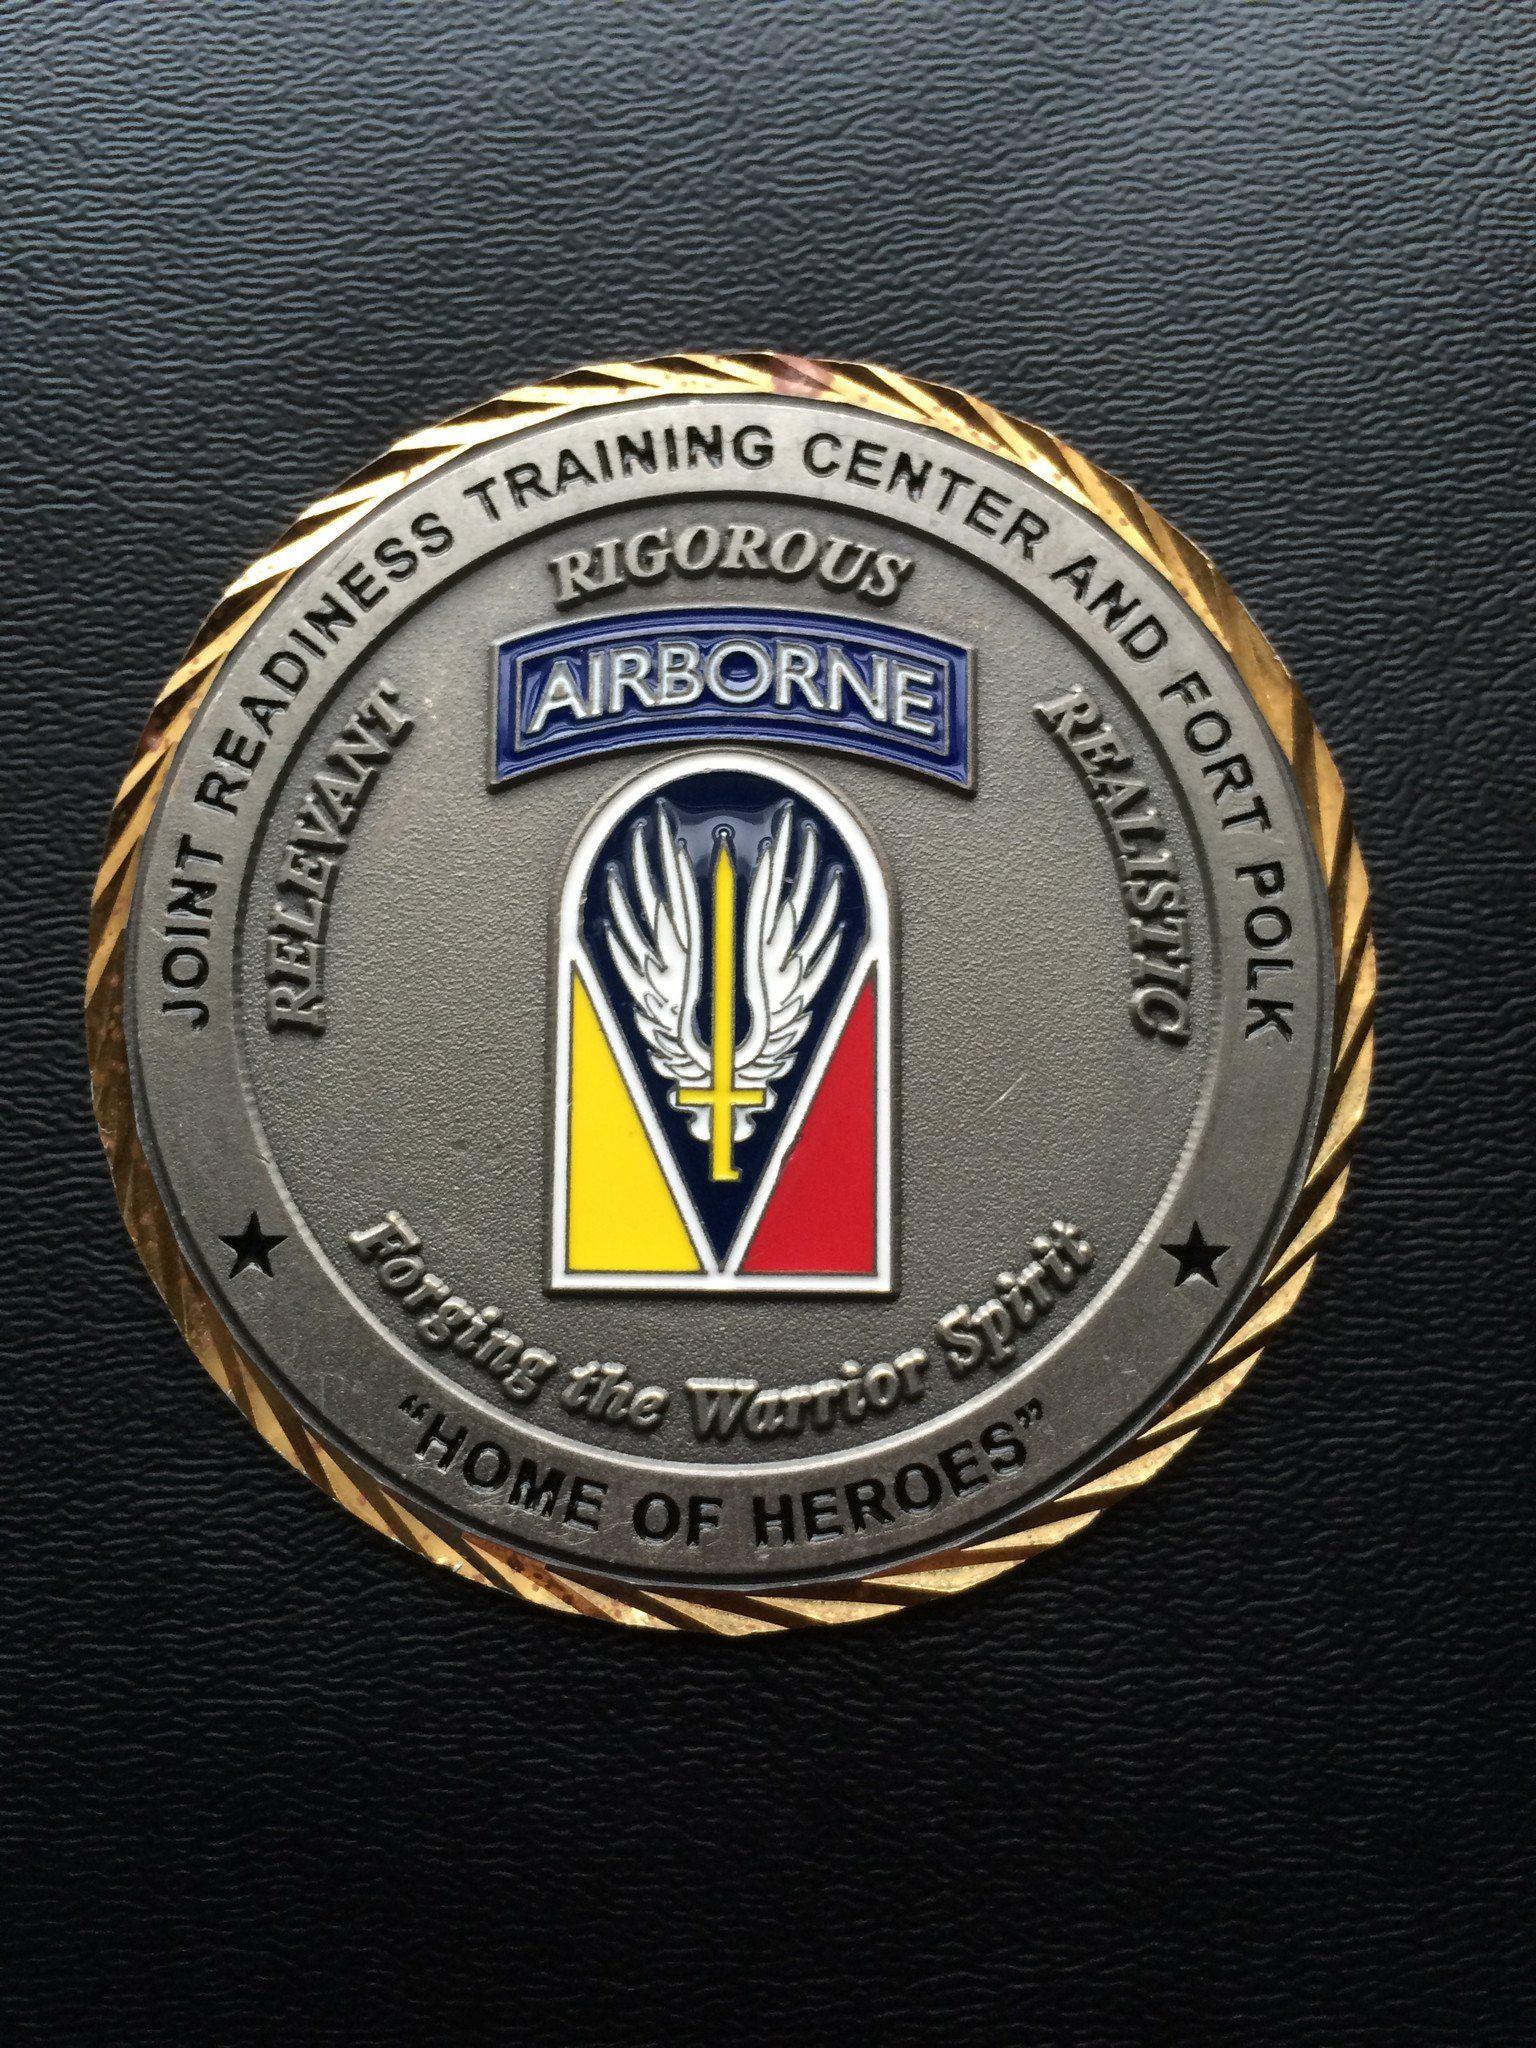 JRTC Logo - JRTC and Fort Polk Commanding General (Version 4)